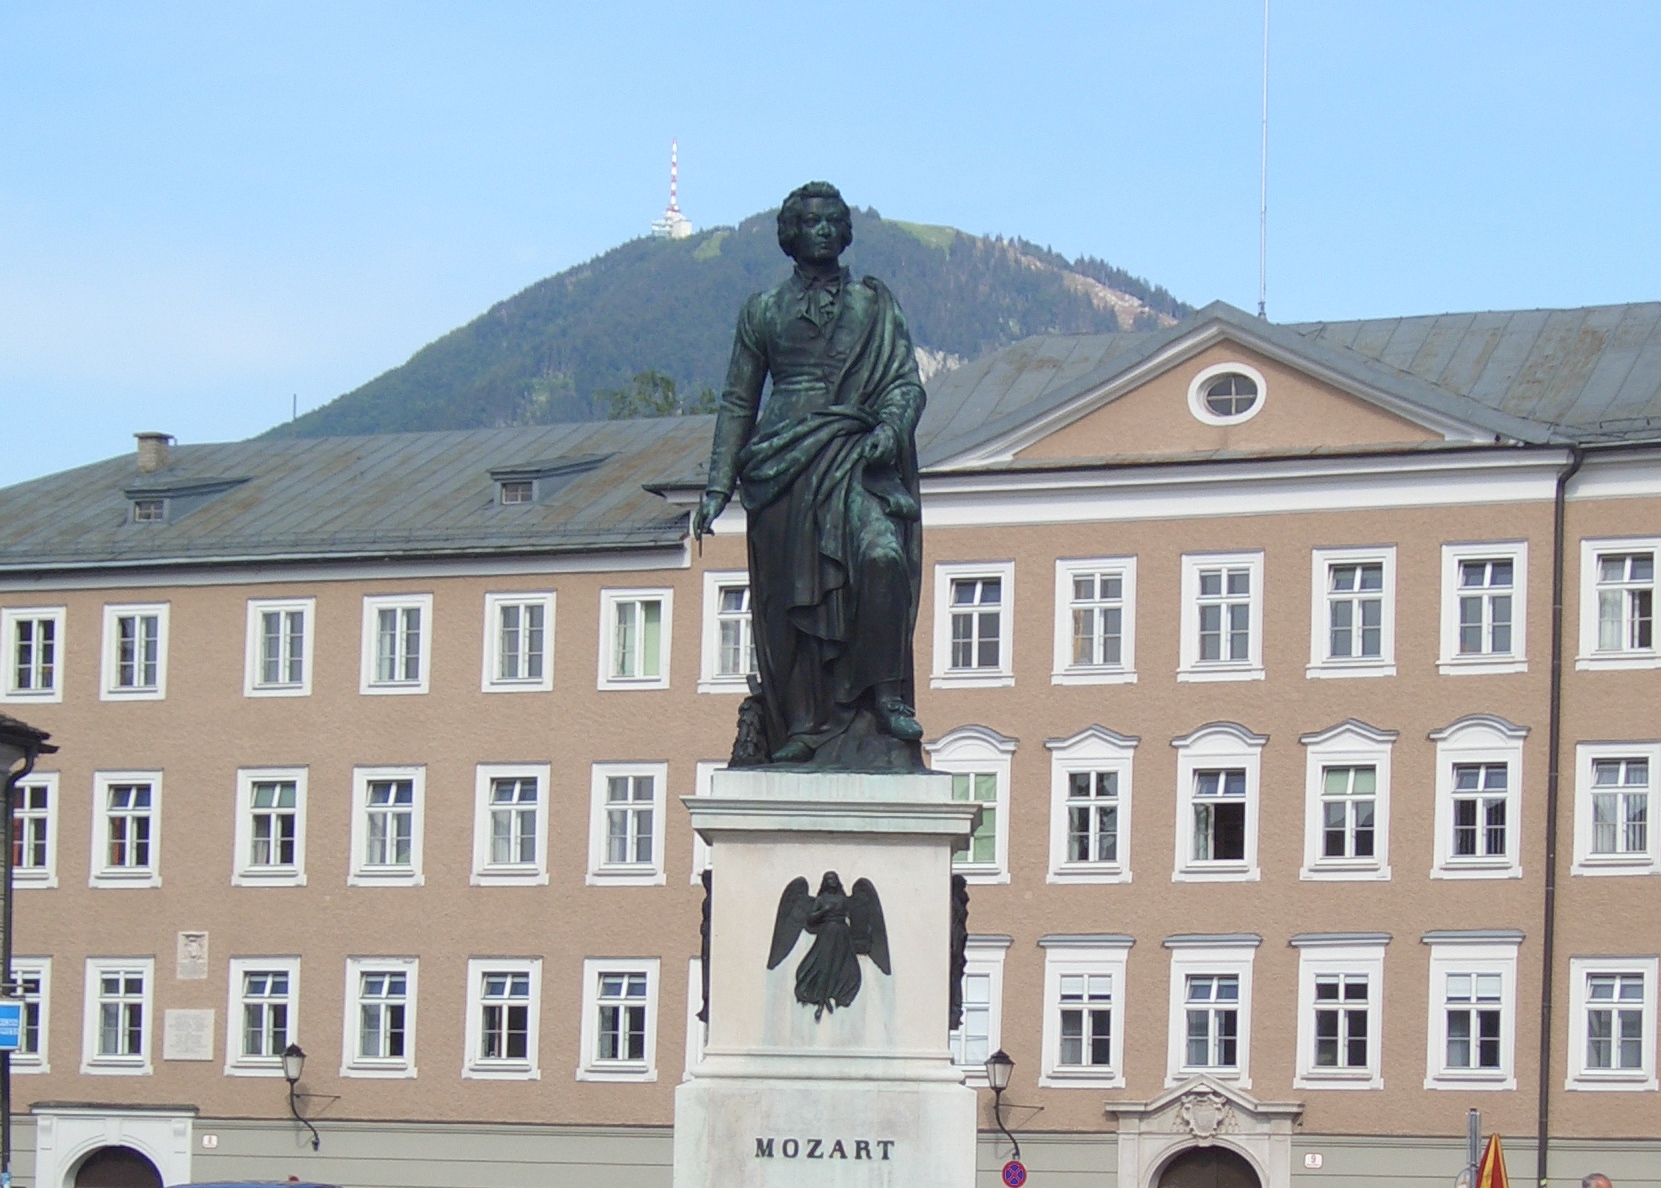 The statue of Mozart in Salzburg